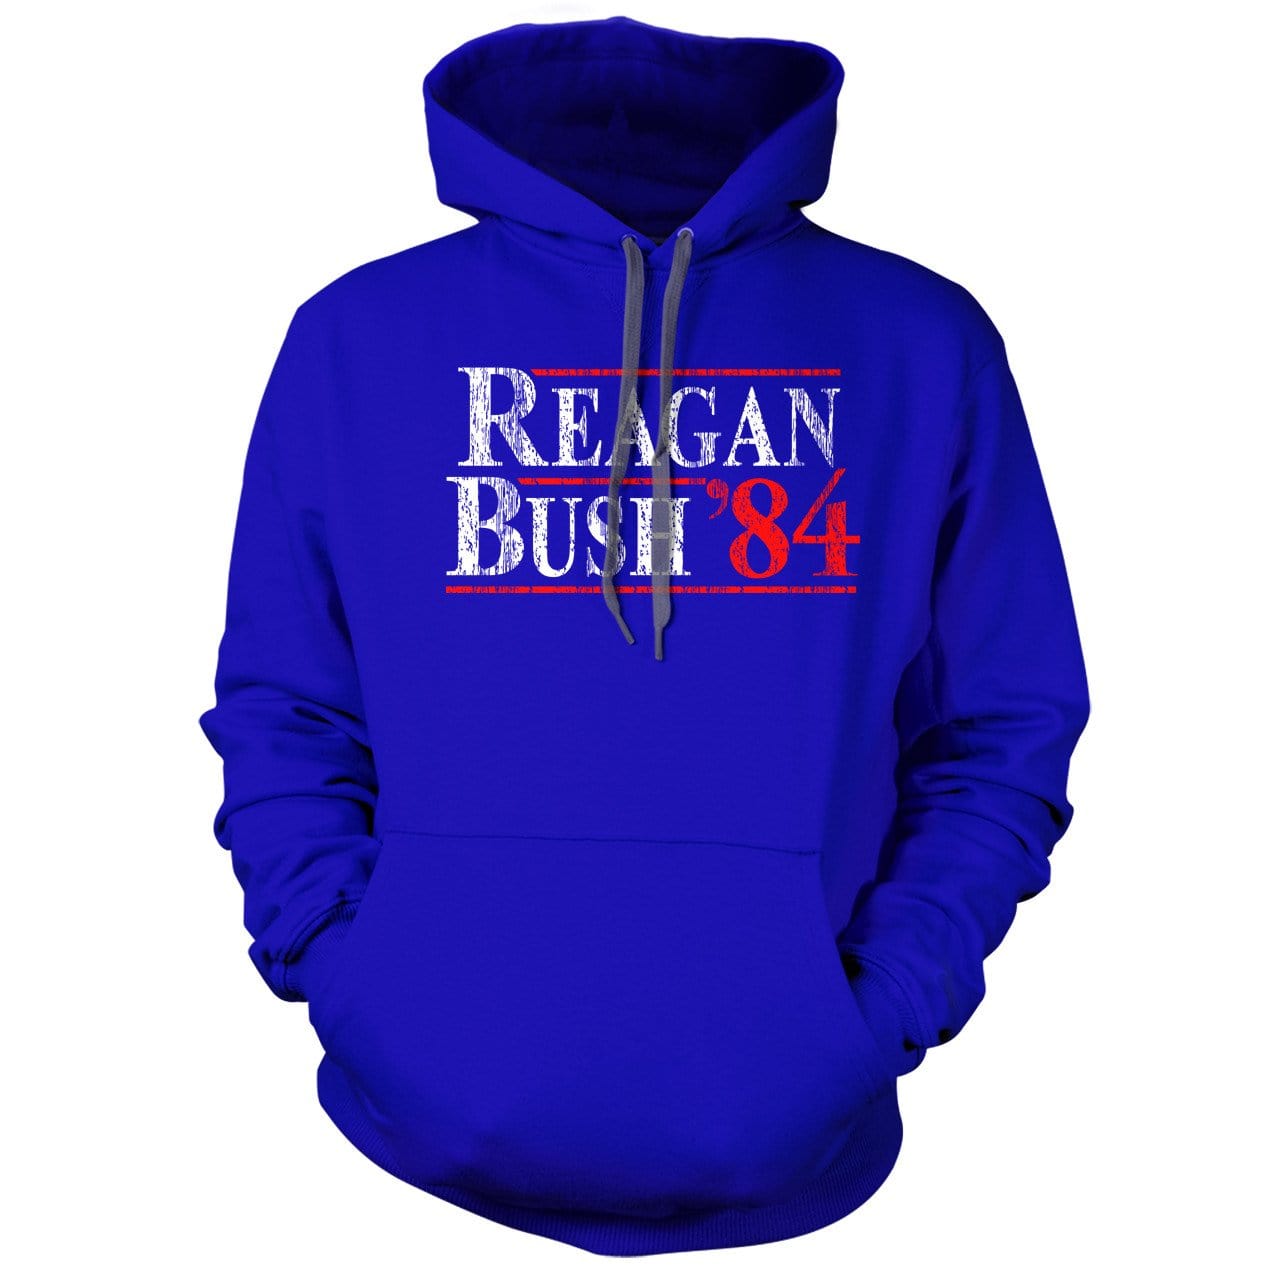 Reagan Bush 84 Election Hoodie - We Got Teez